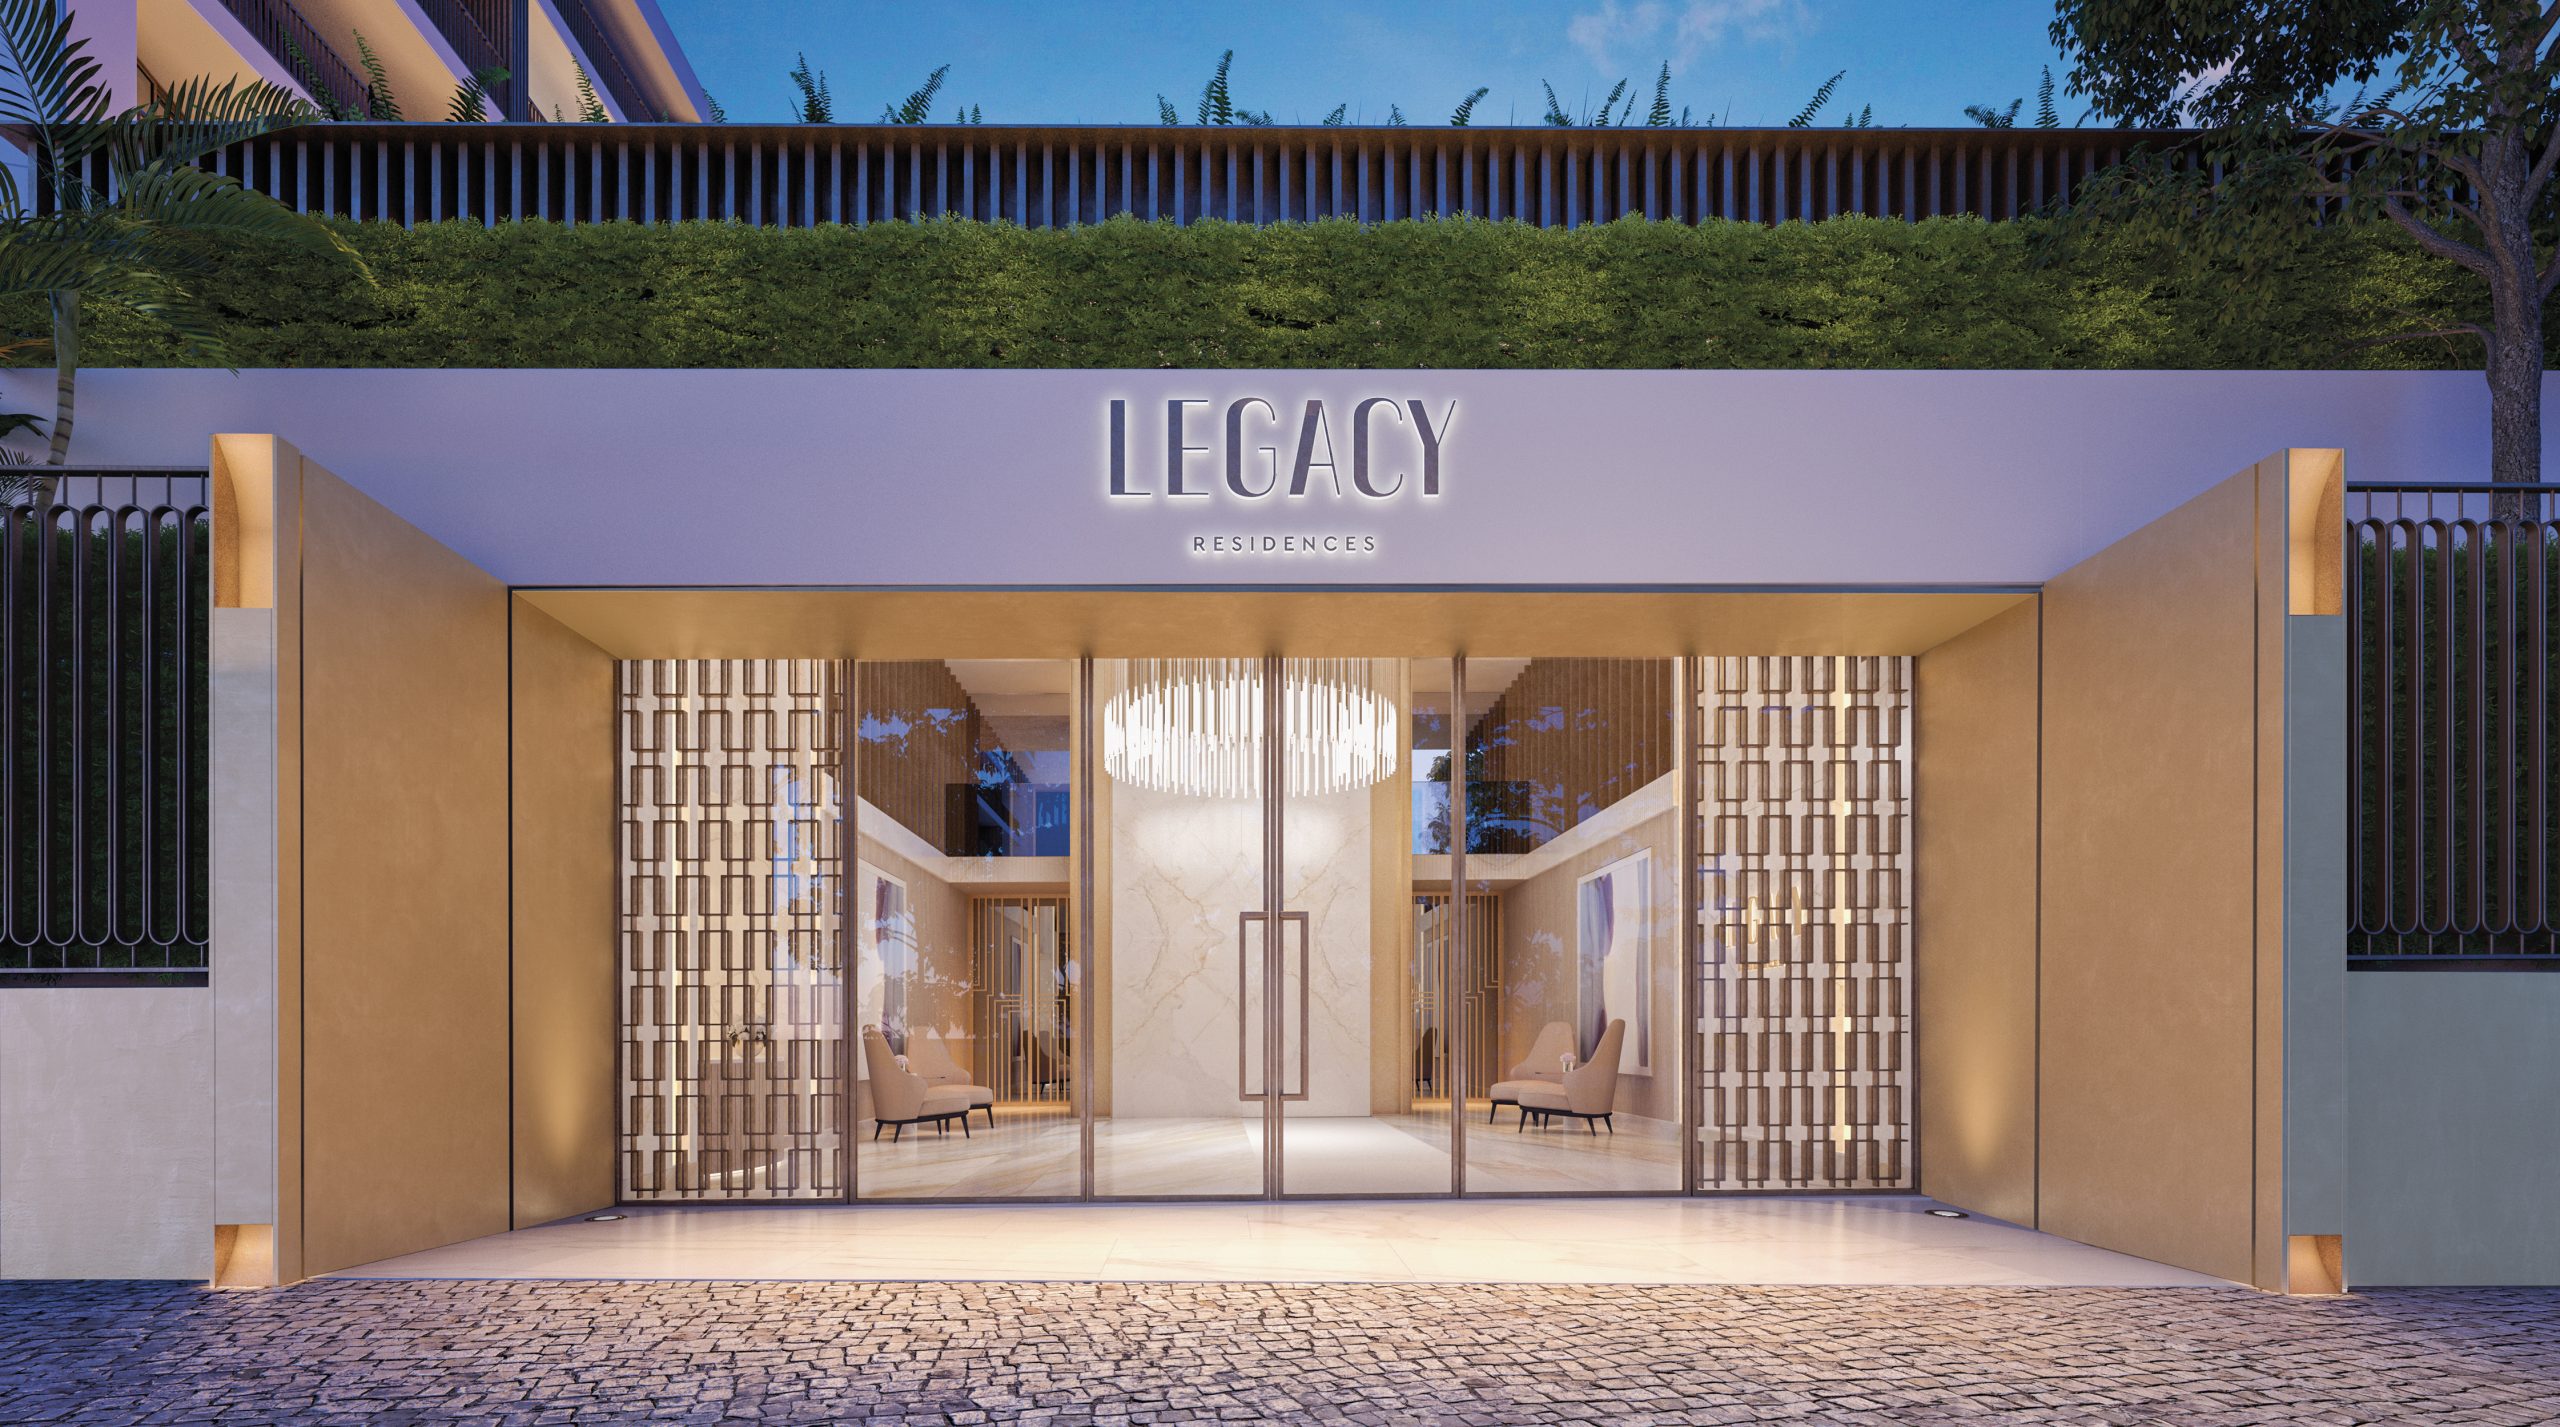 Legacy Residences Entrance Northview By Gavinho Scaled, Design Authority